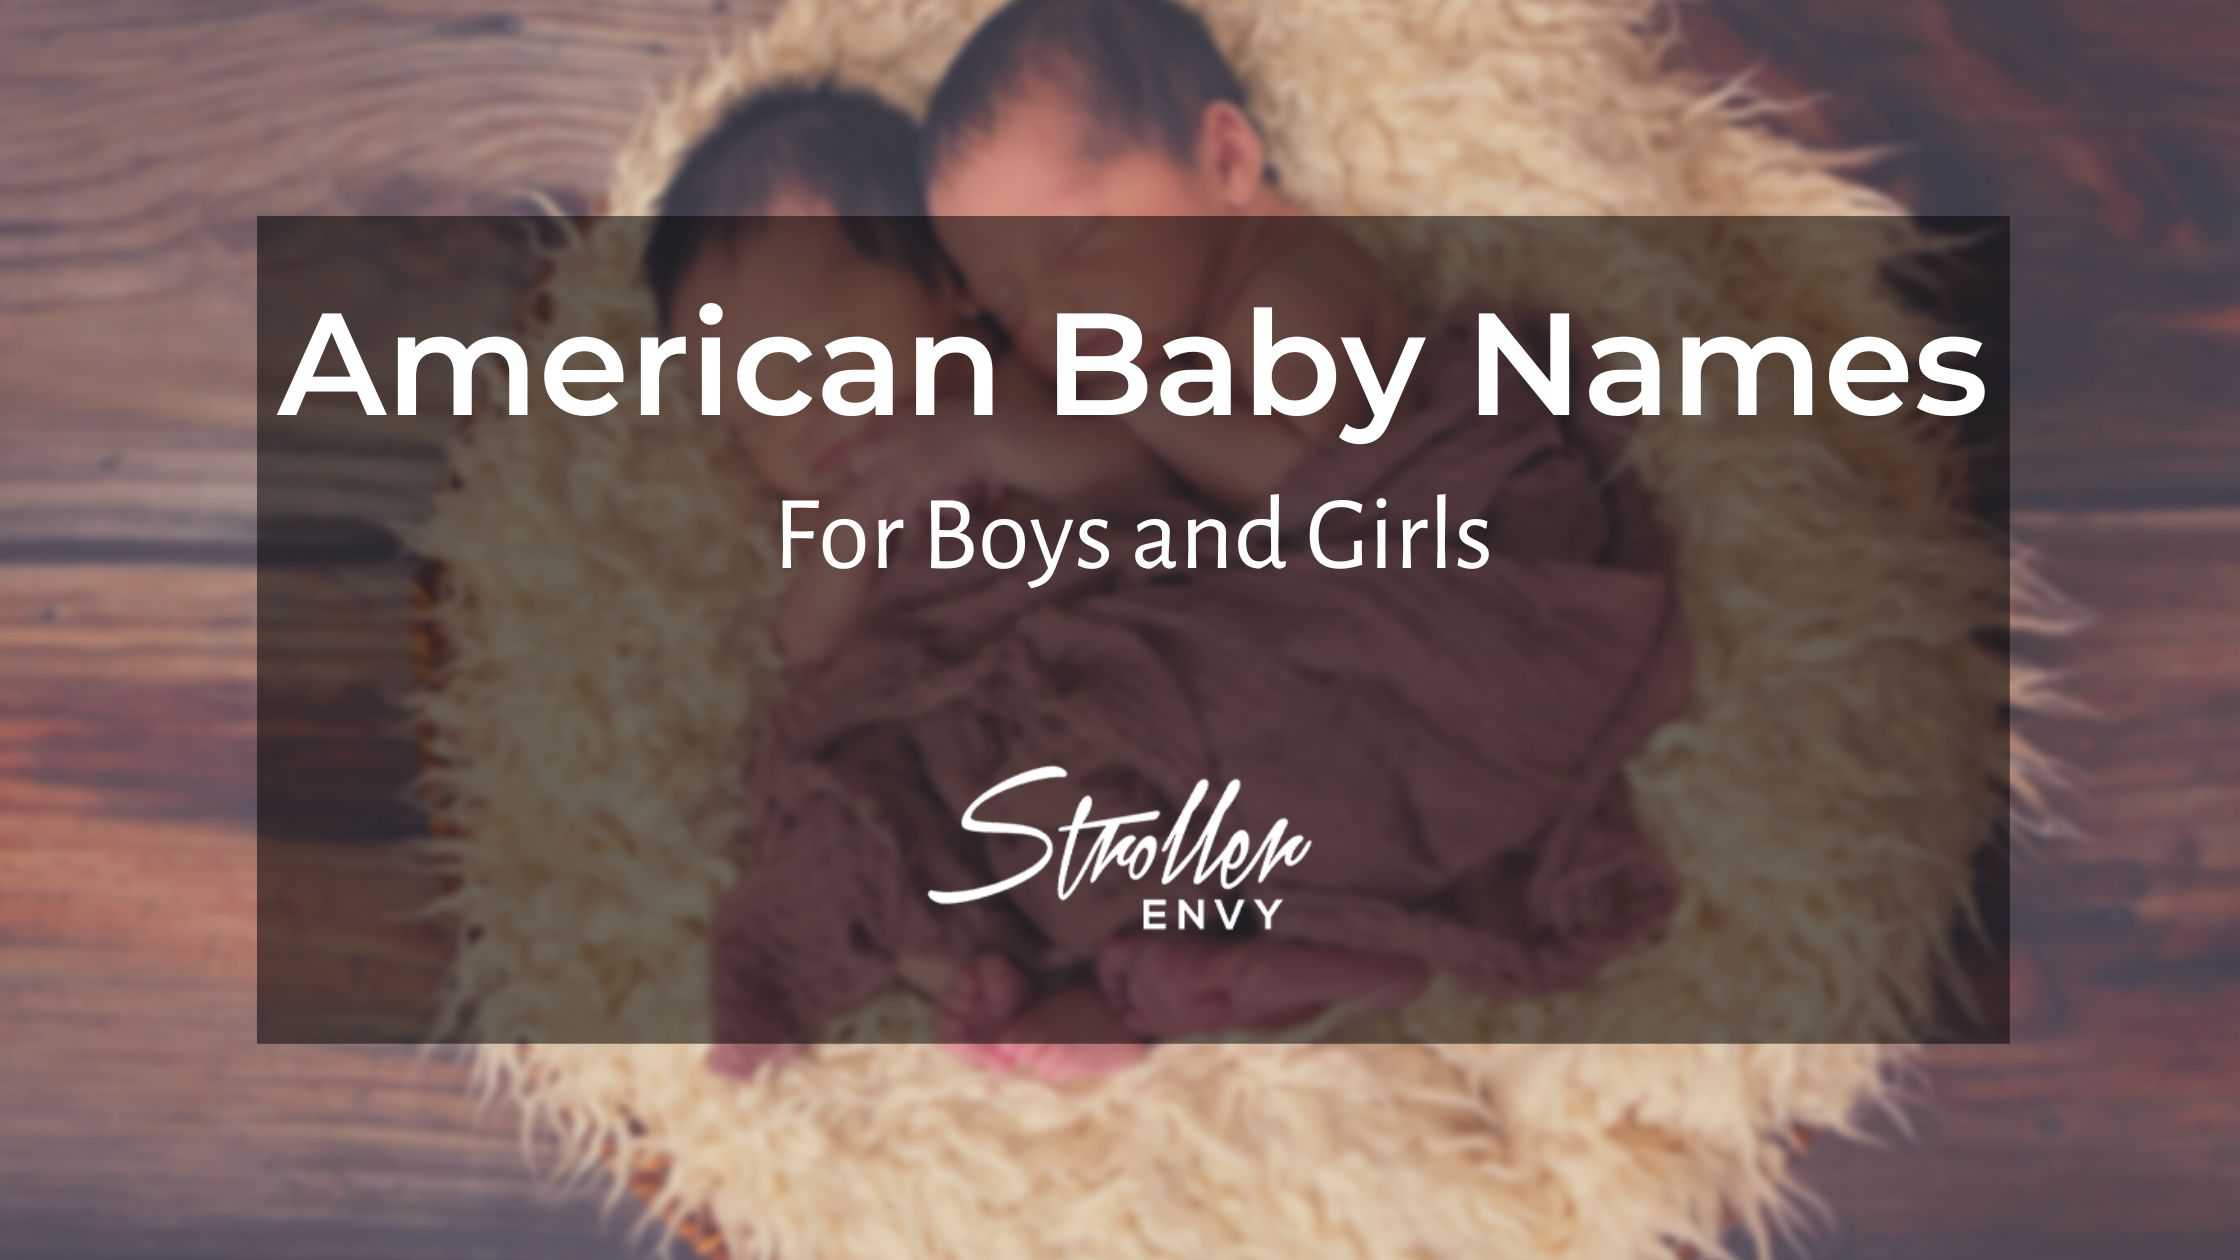 American baby names